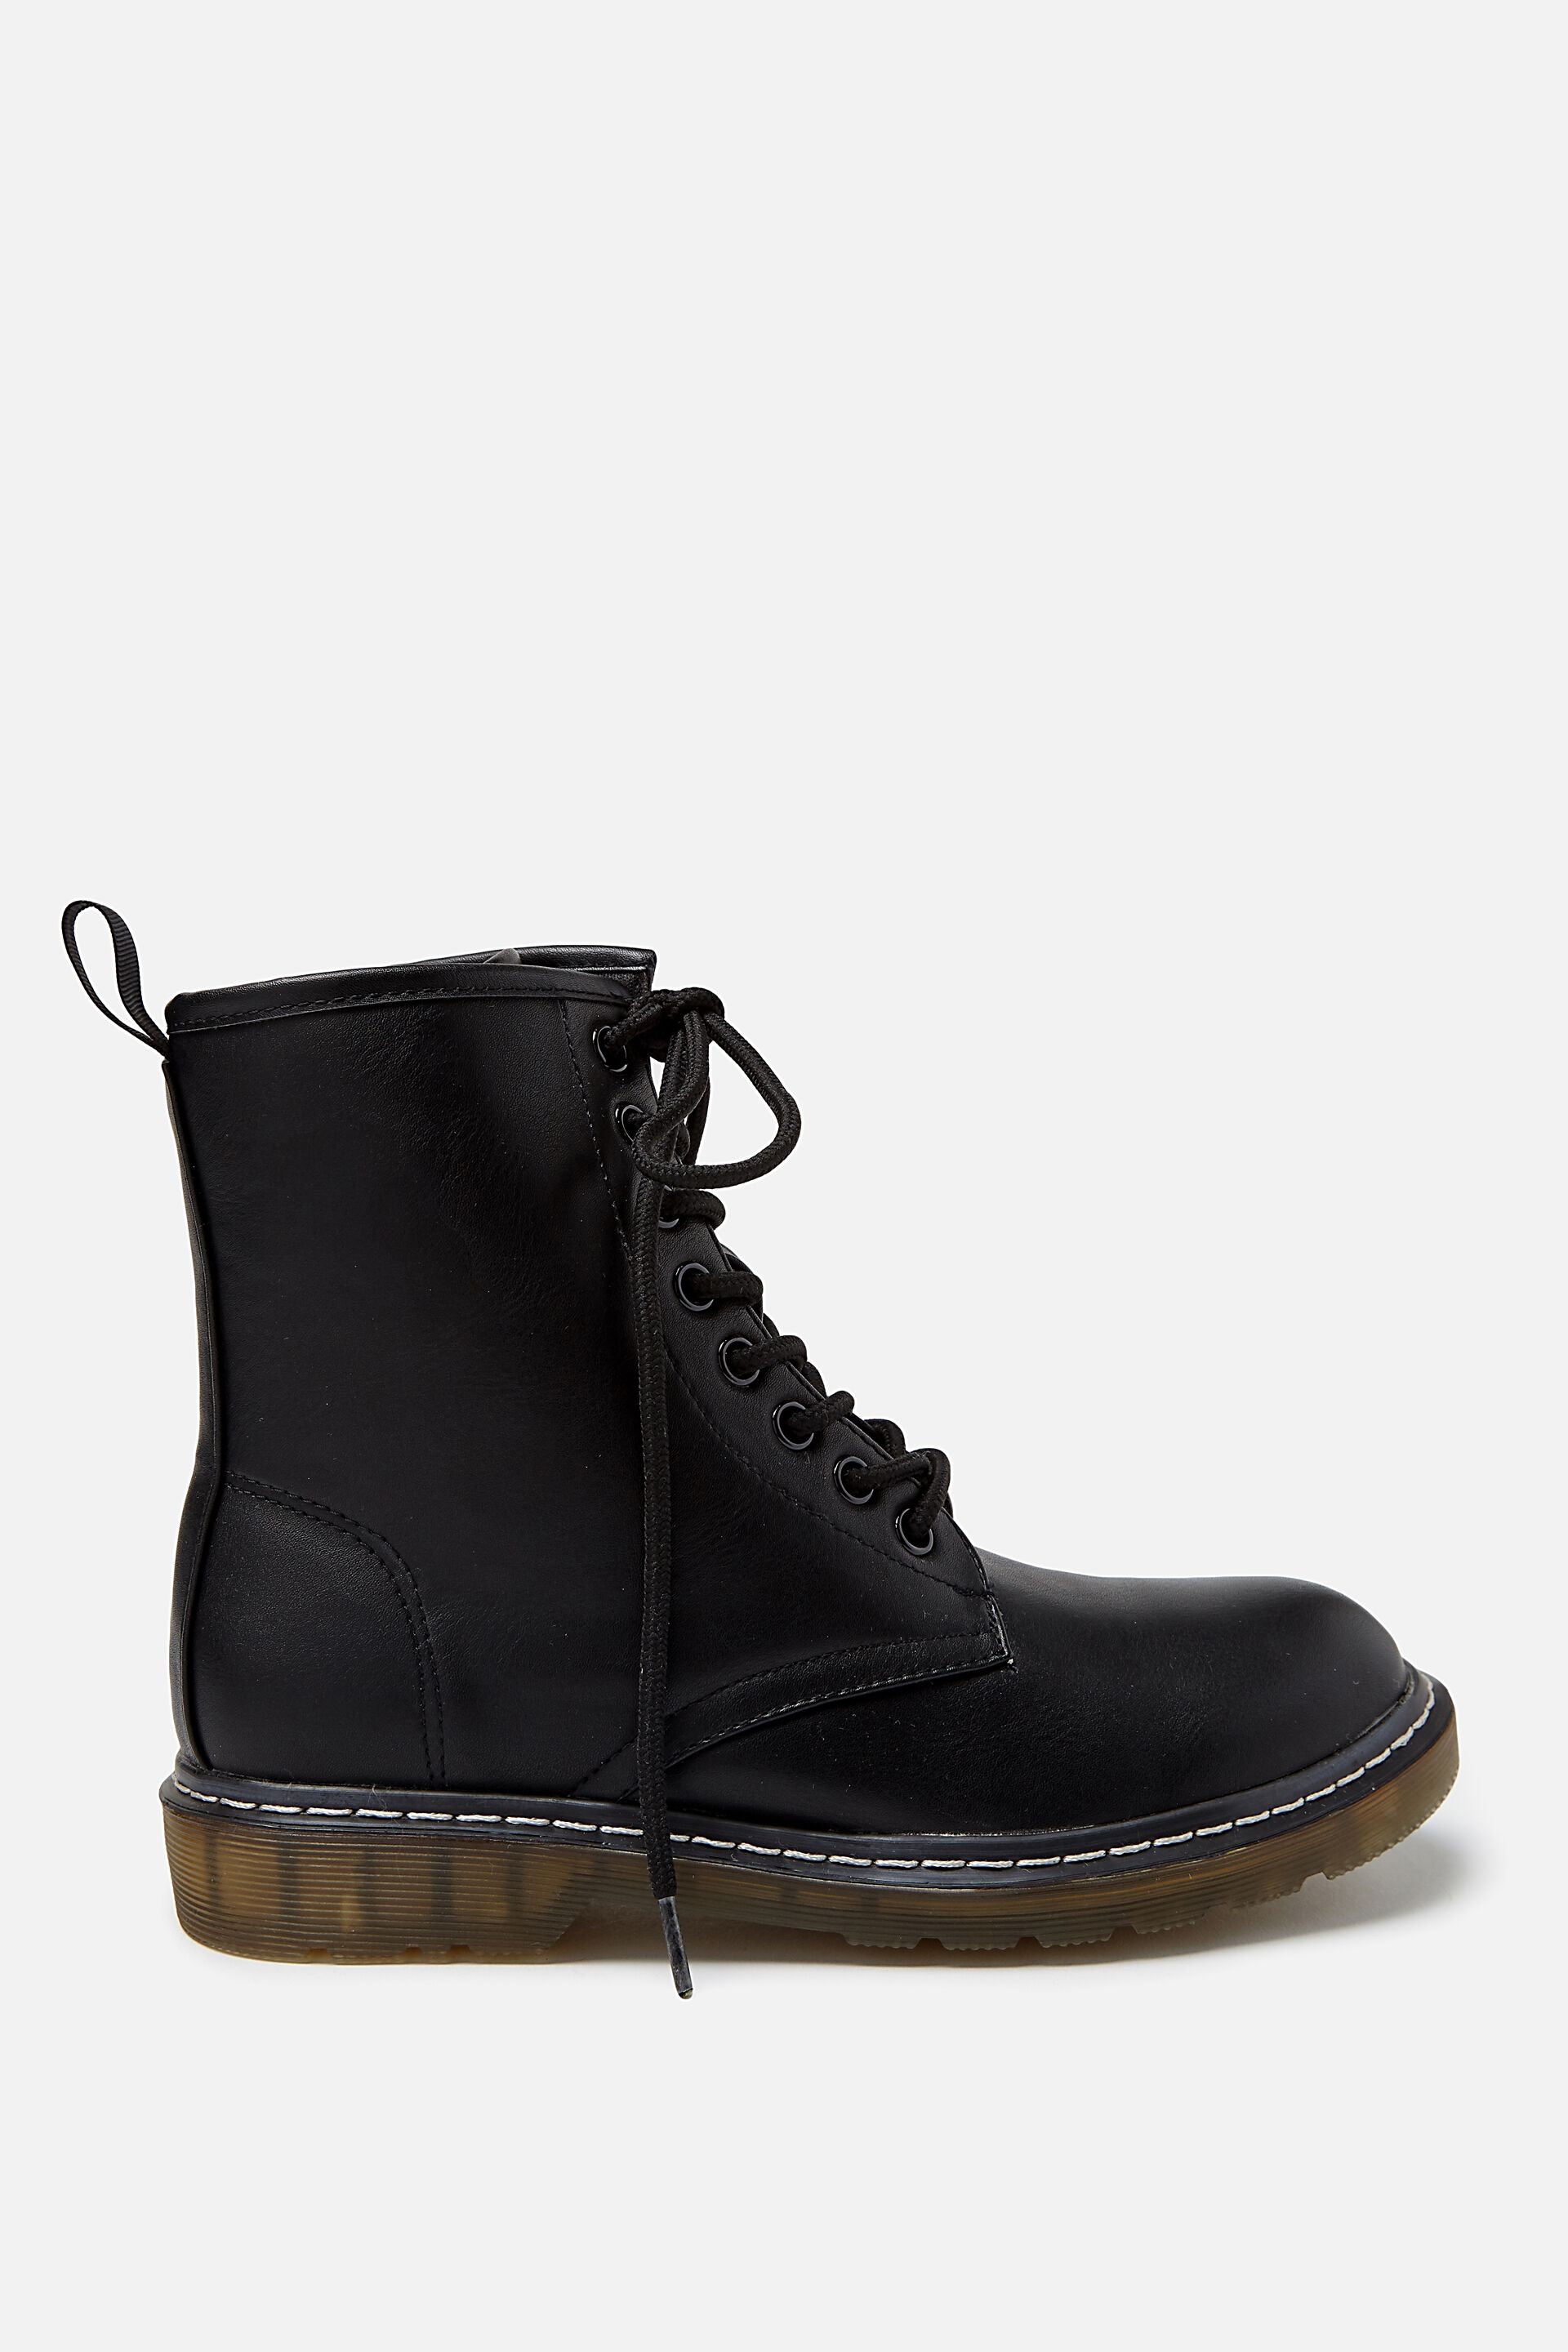 cotton on black boots